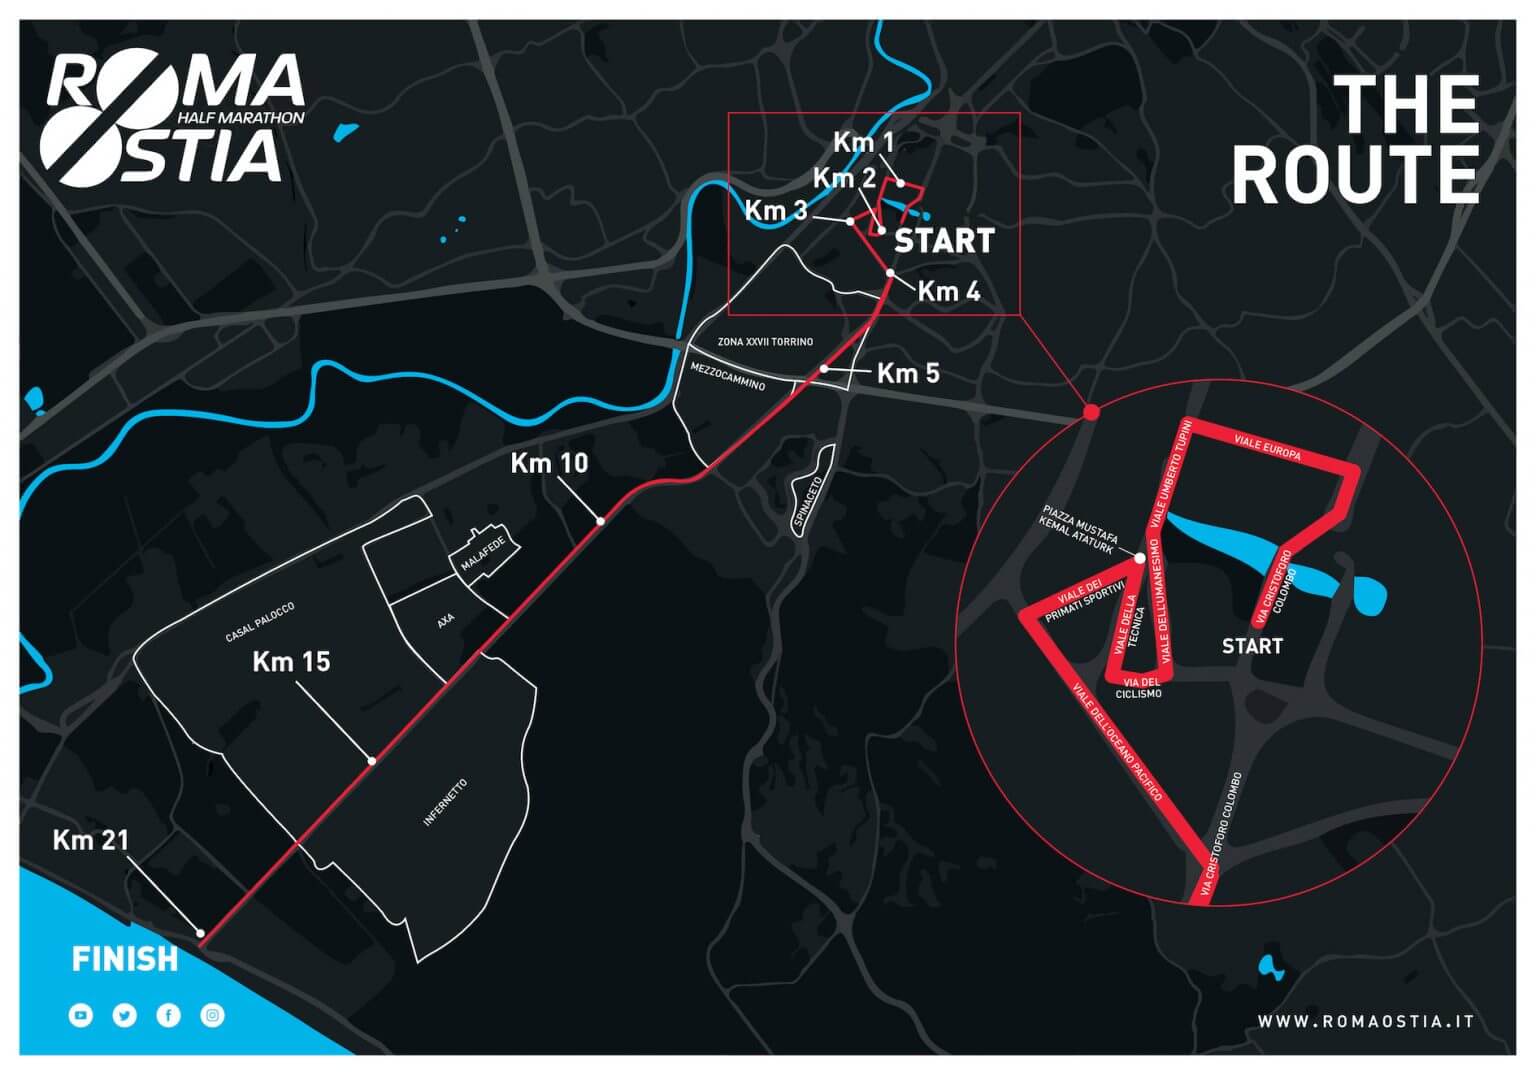 Route map of the half marathon Rome Ostia 2022